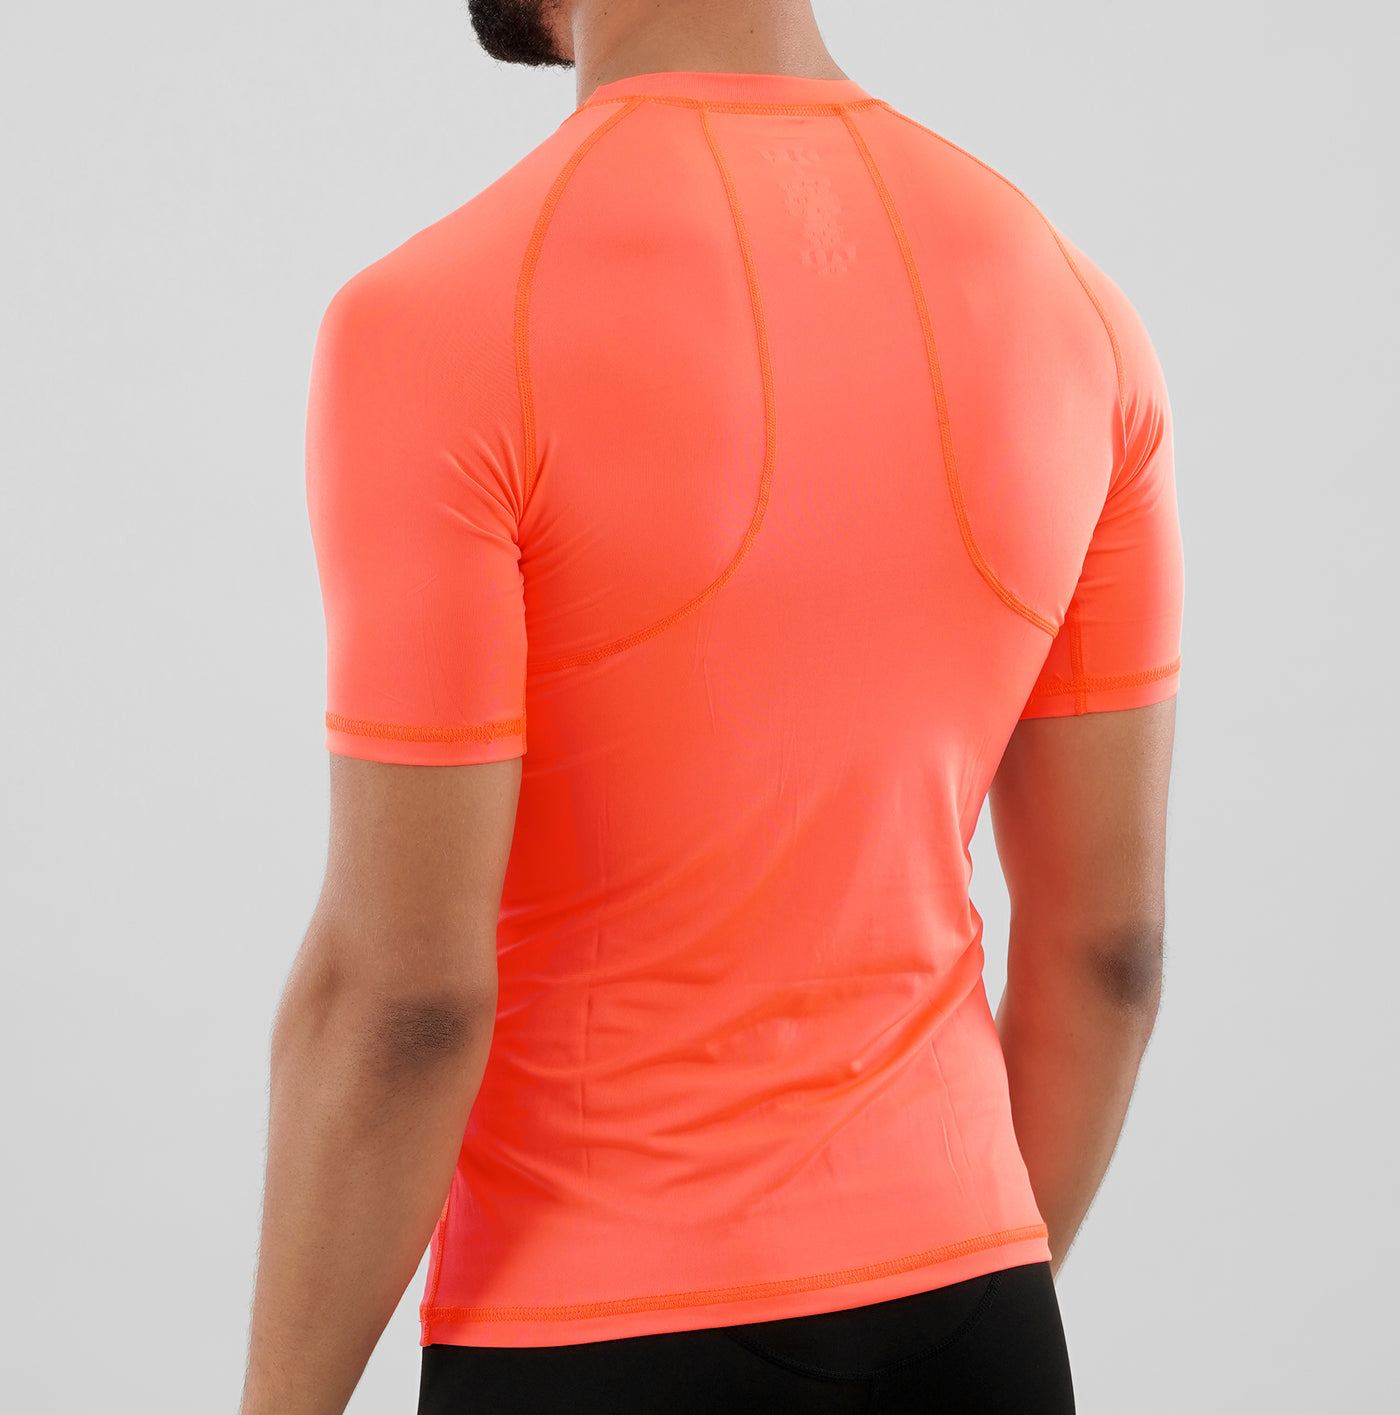 Neon Orange Compression Shirt